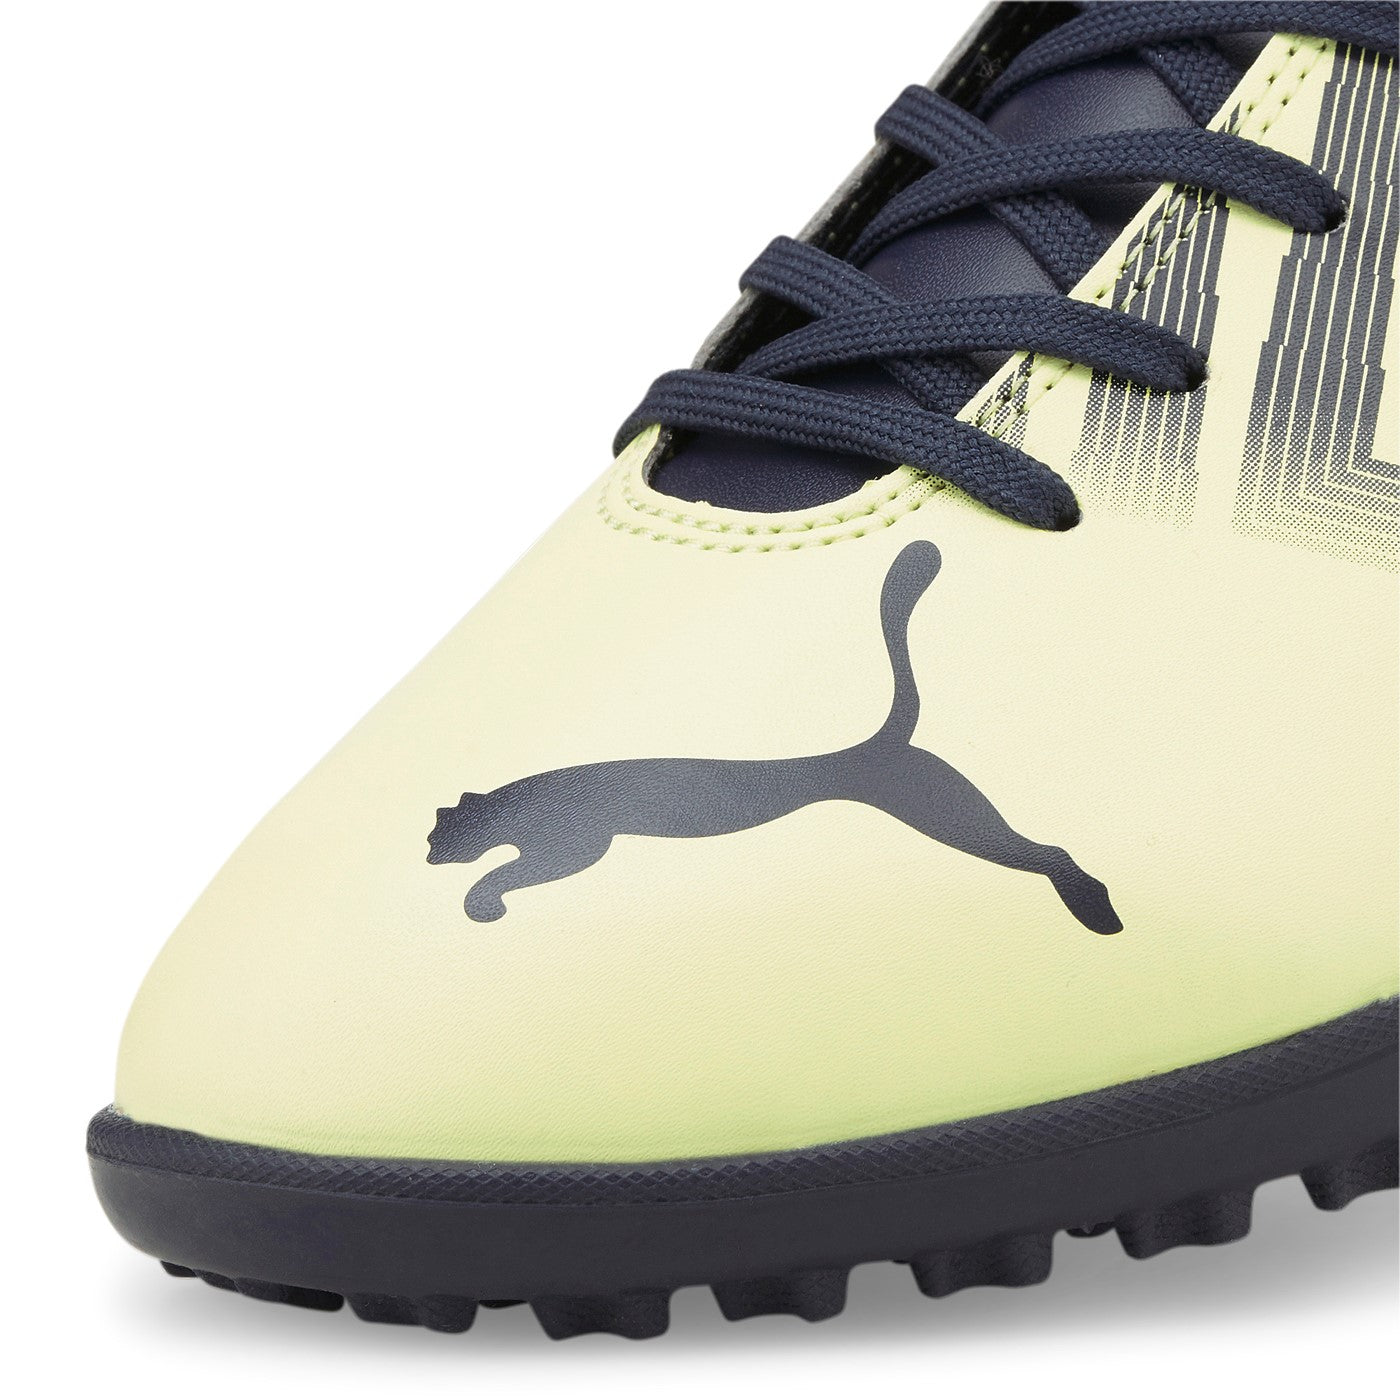 Puma scarpa da calcetto Tacto II TT 106702 05 fresh yellow-parisian night